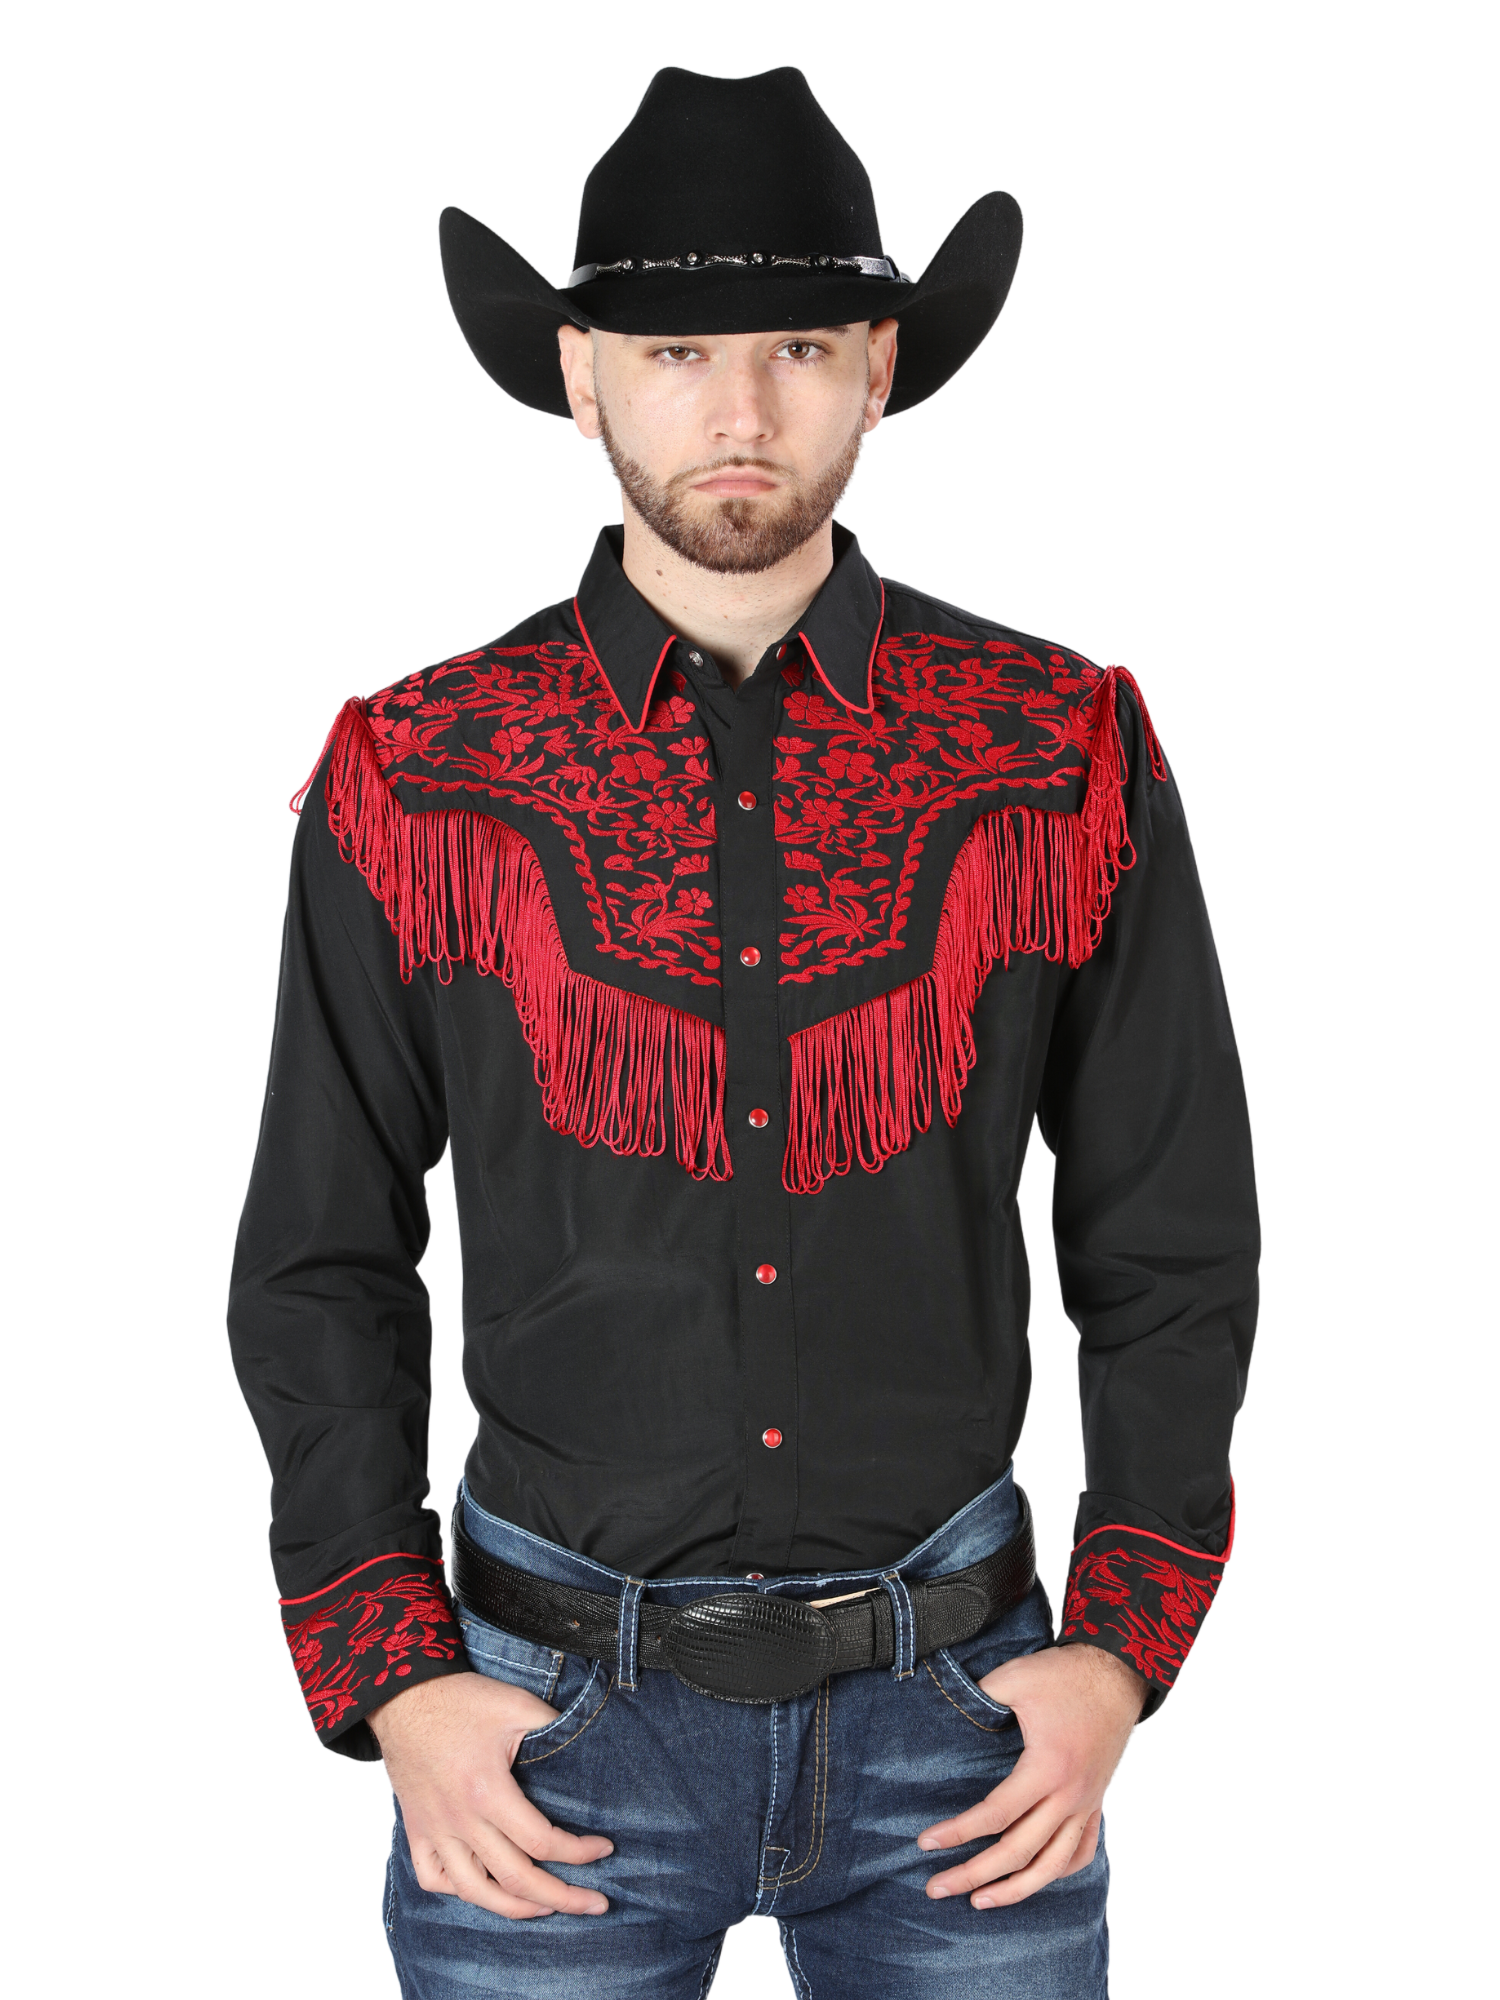 Camisa Vaquera Bordada Manga Larga Negro para Hombre 'El Señor de los Cielos' - ID: 126726 Western Shirt El Señor de los Cielos Black